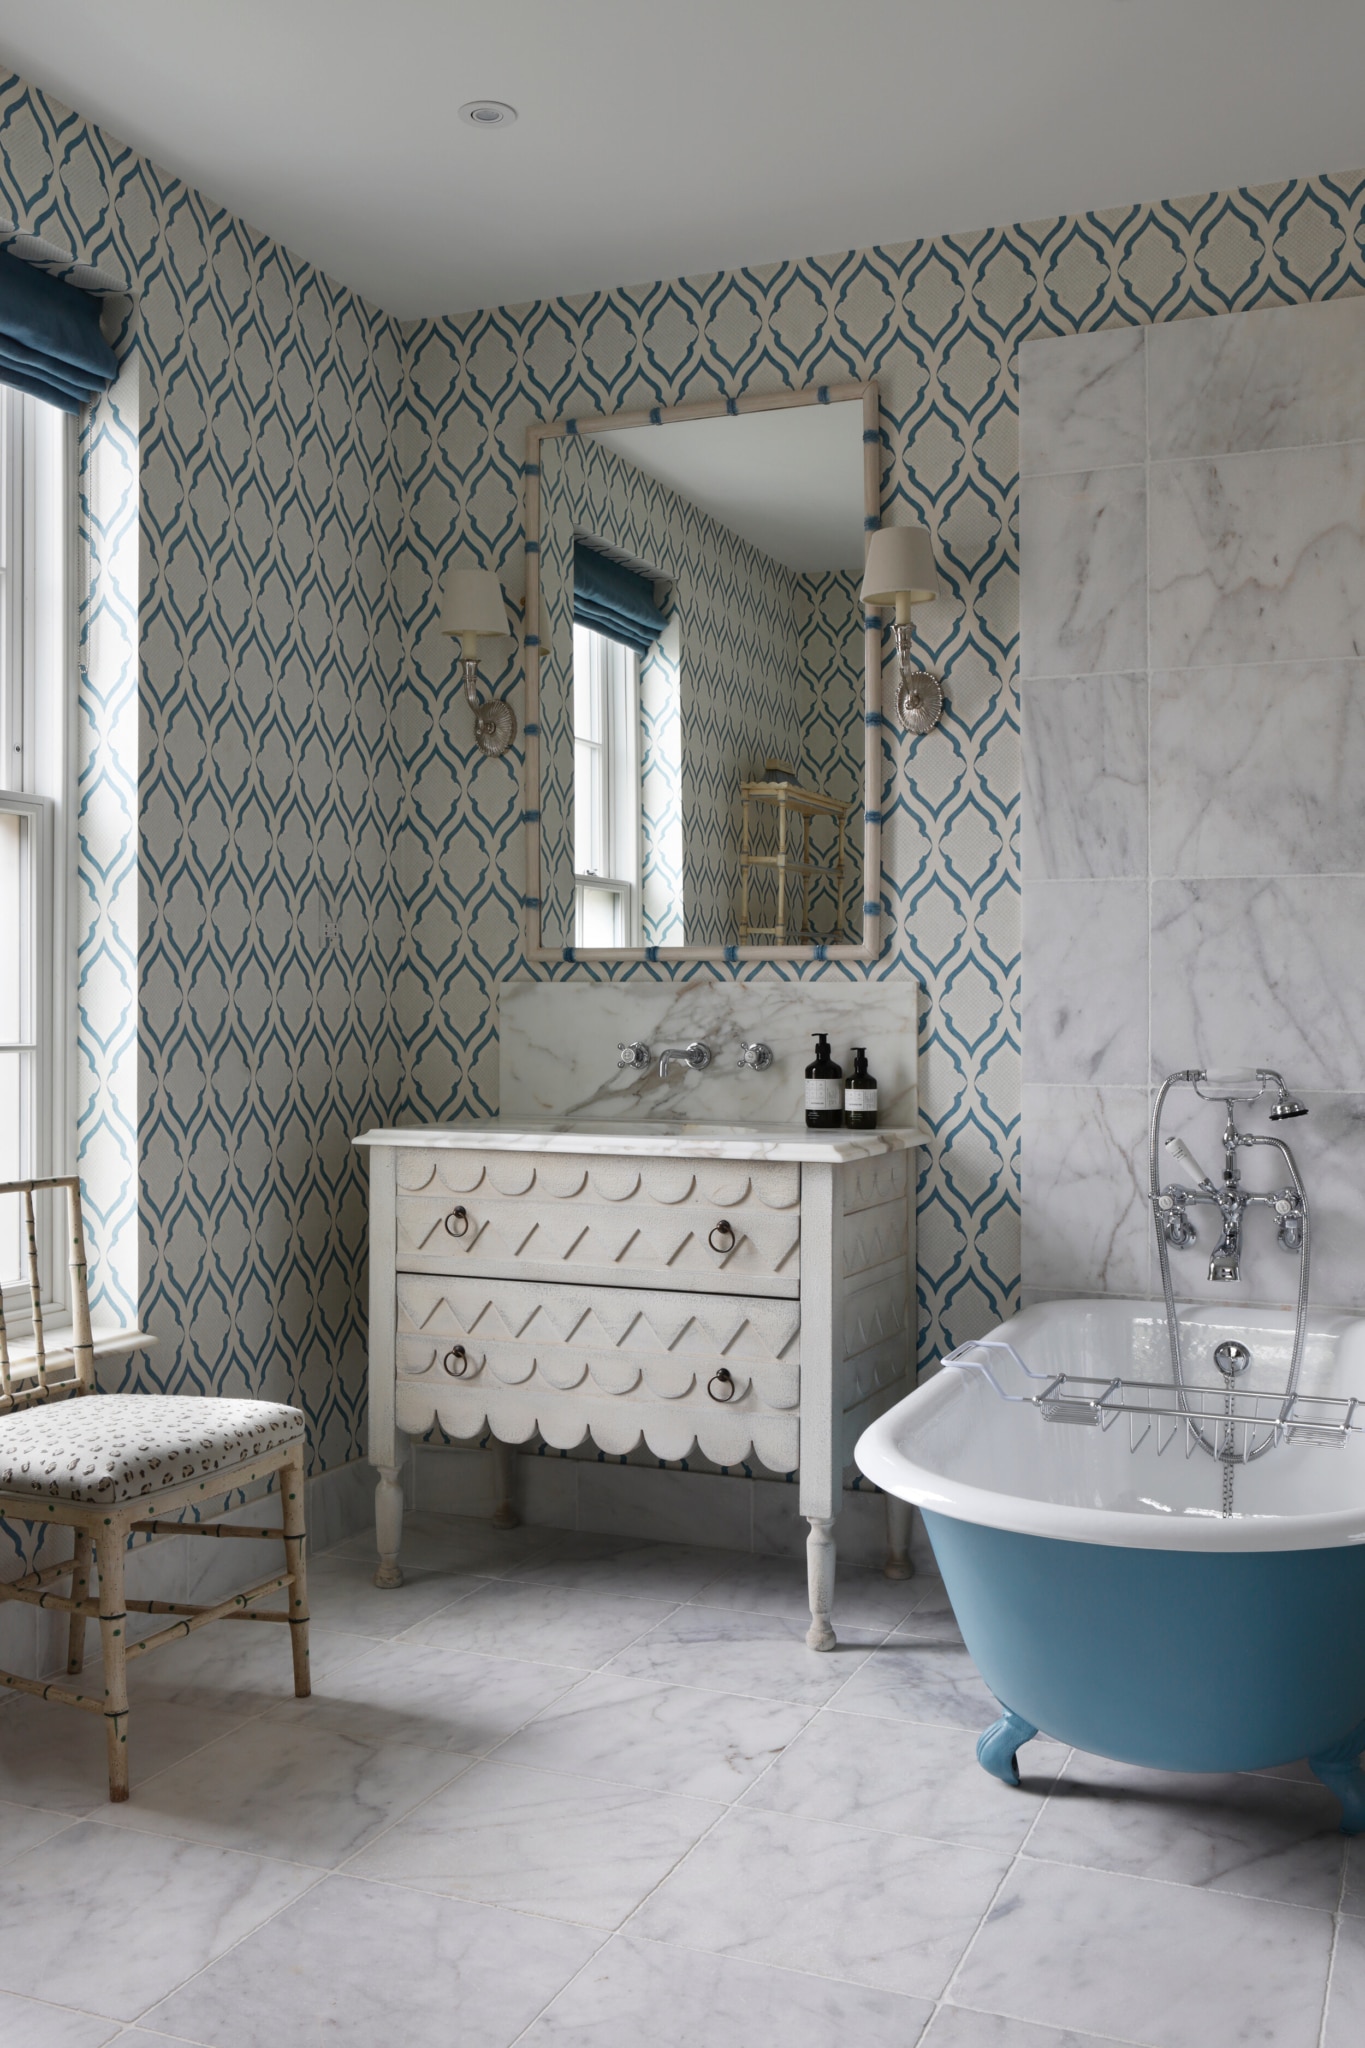 HÁM INTERIORS - bathroom - bathroom makeover - bathroom design - bathroom decor - freestanding tub -London designer